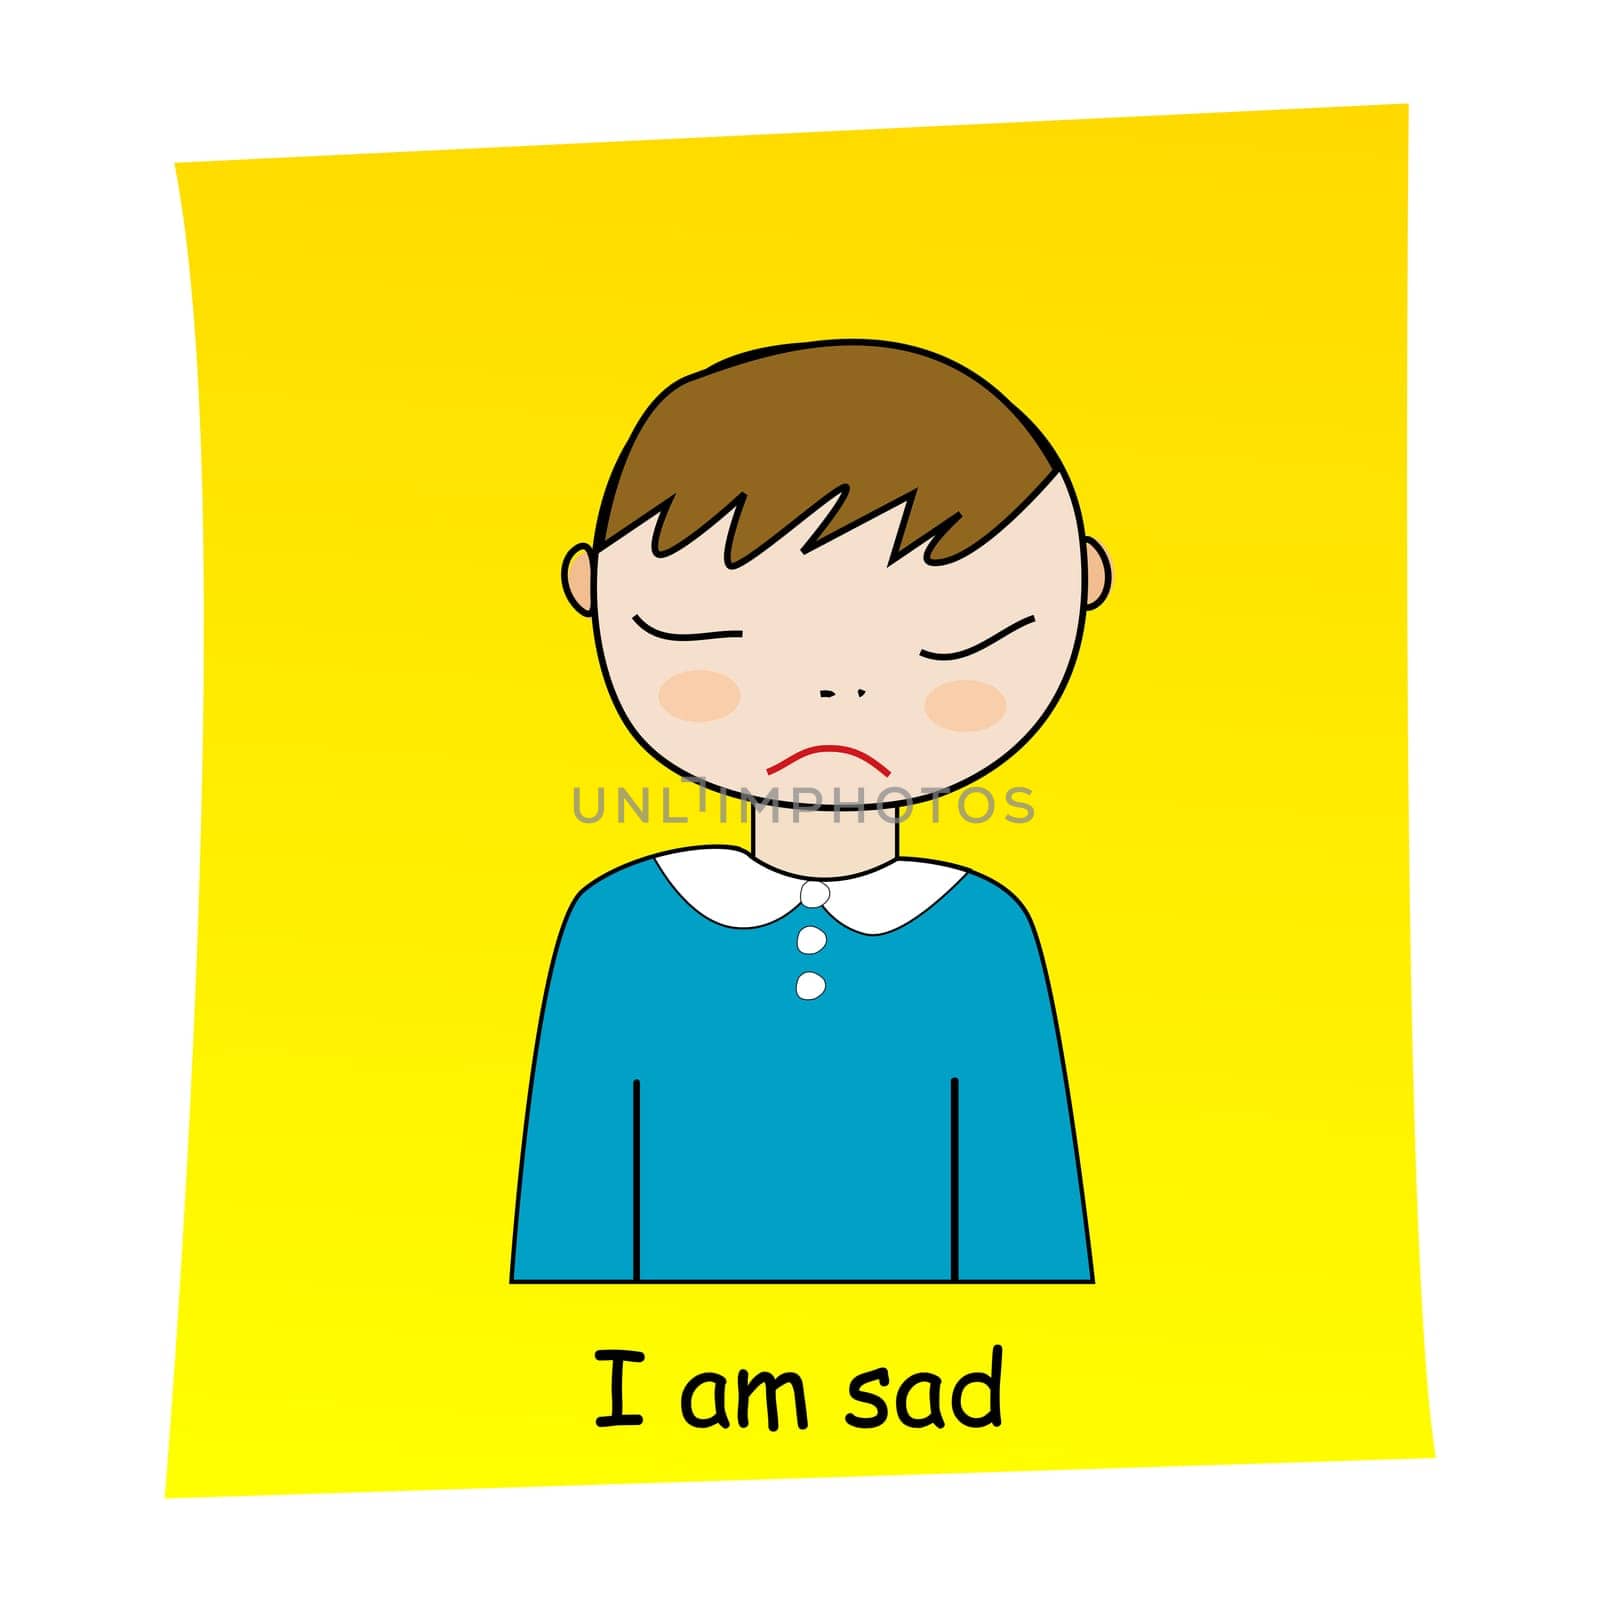 I am sad concept. Cartoon hand drawn boy with sad expression